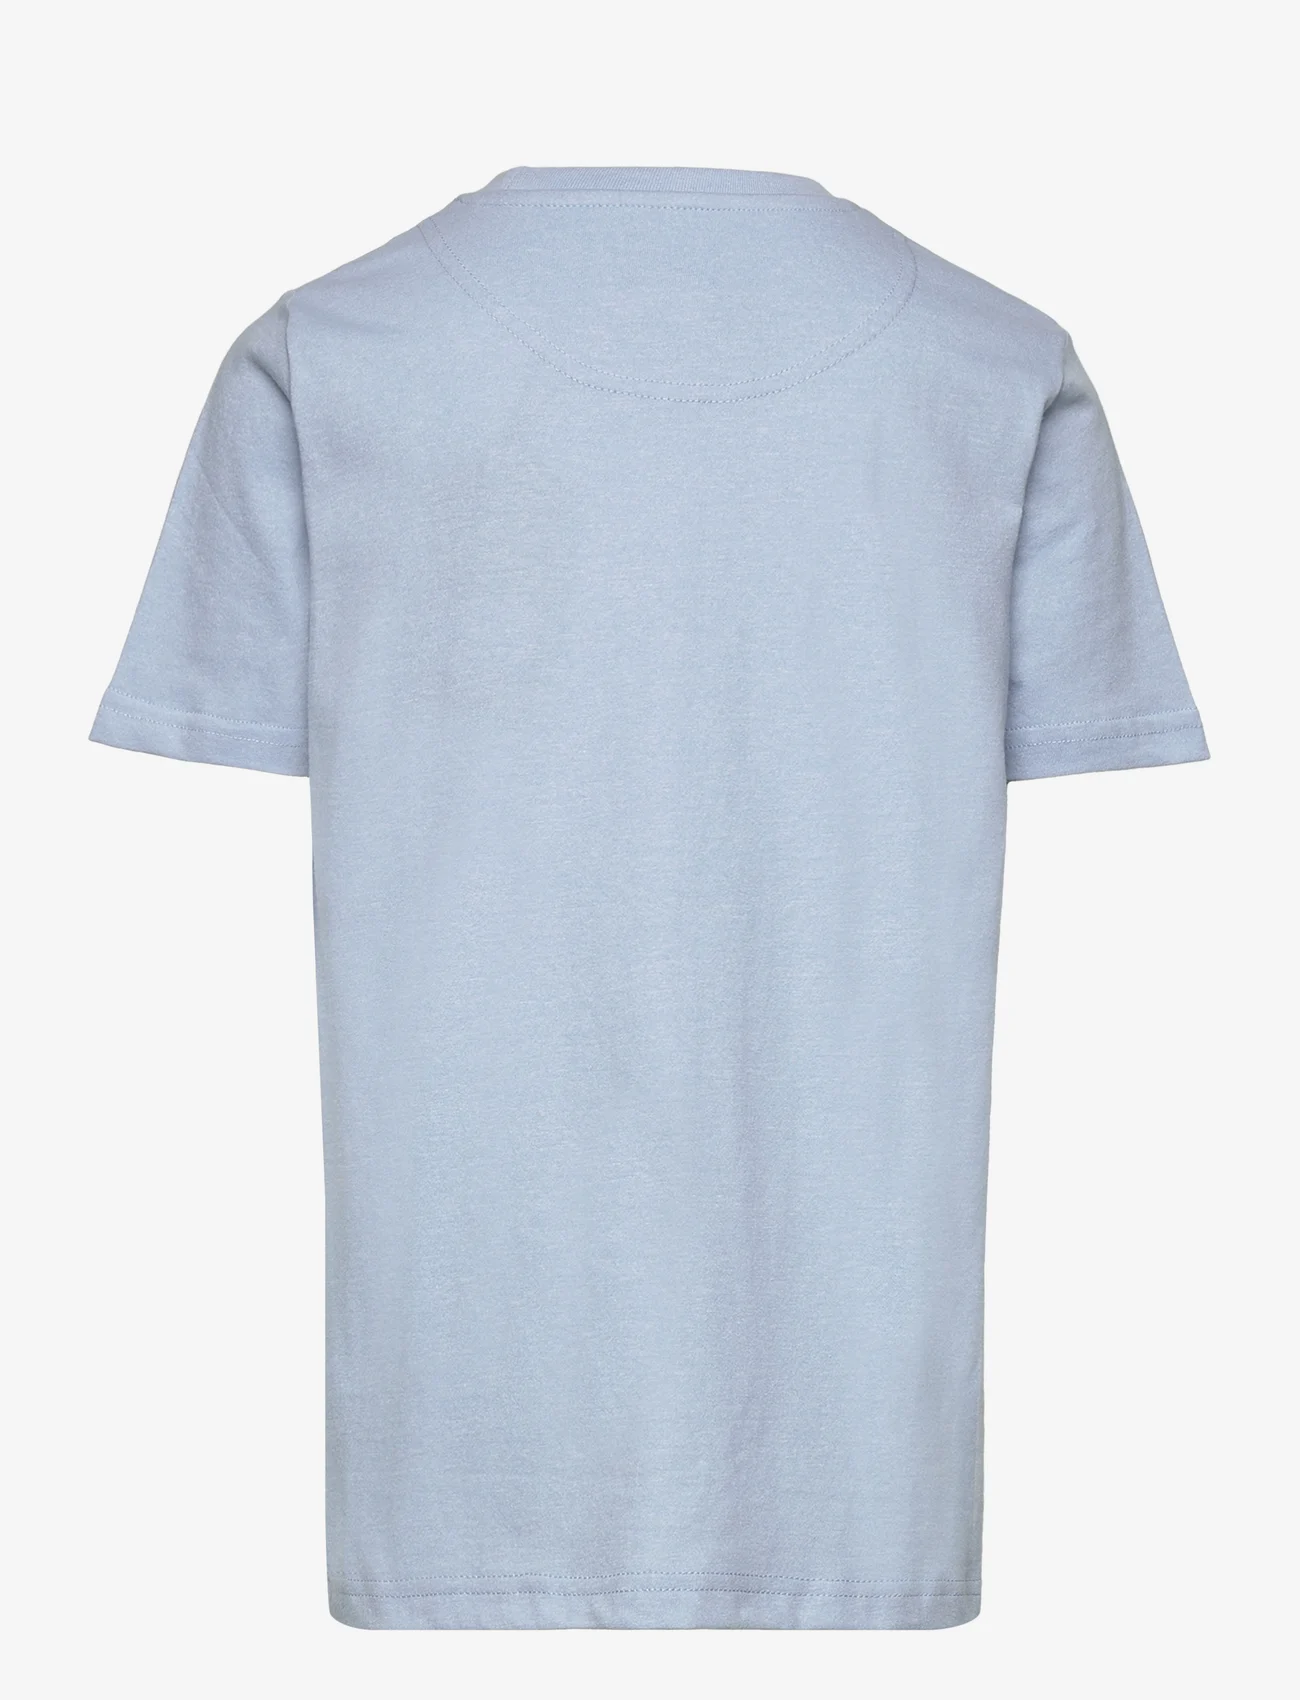 Lyle & Scott Junior - Marl Tee - kortärmade t-shirts - chambray blue - 1